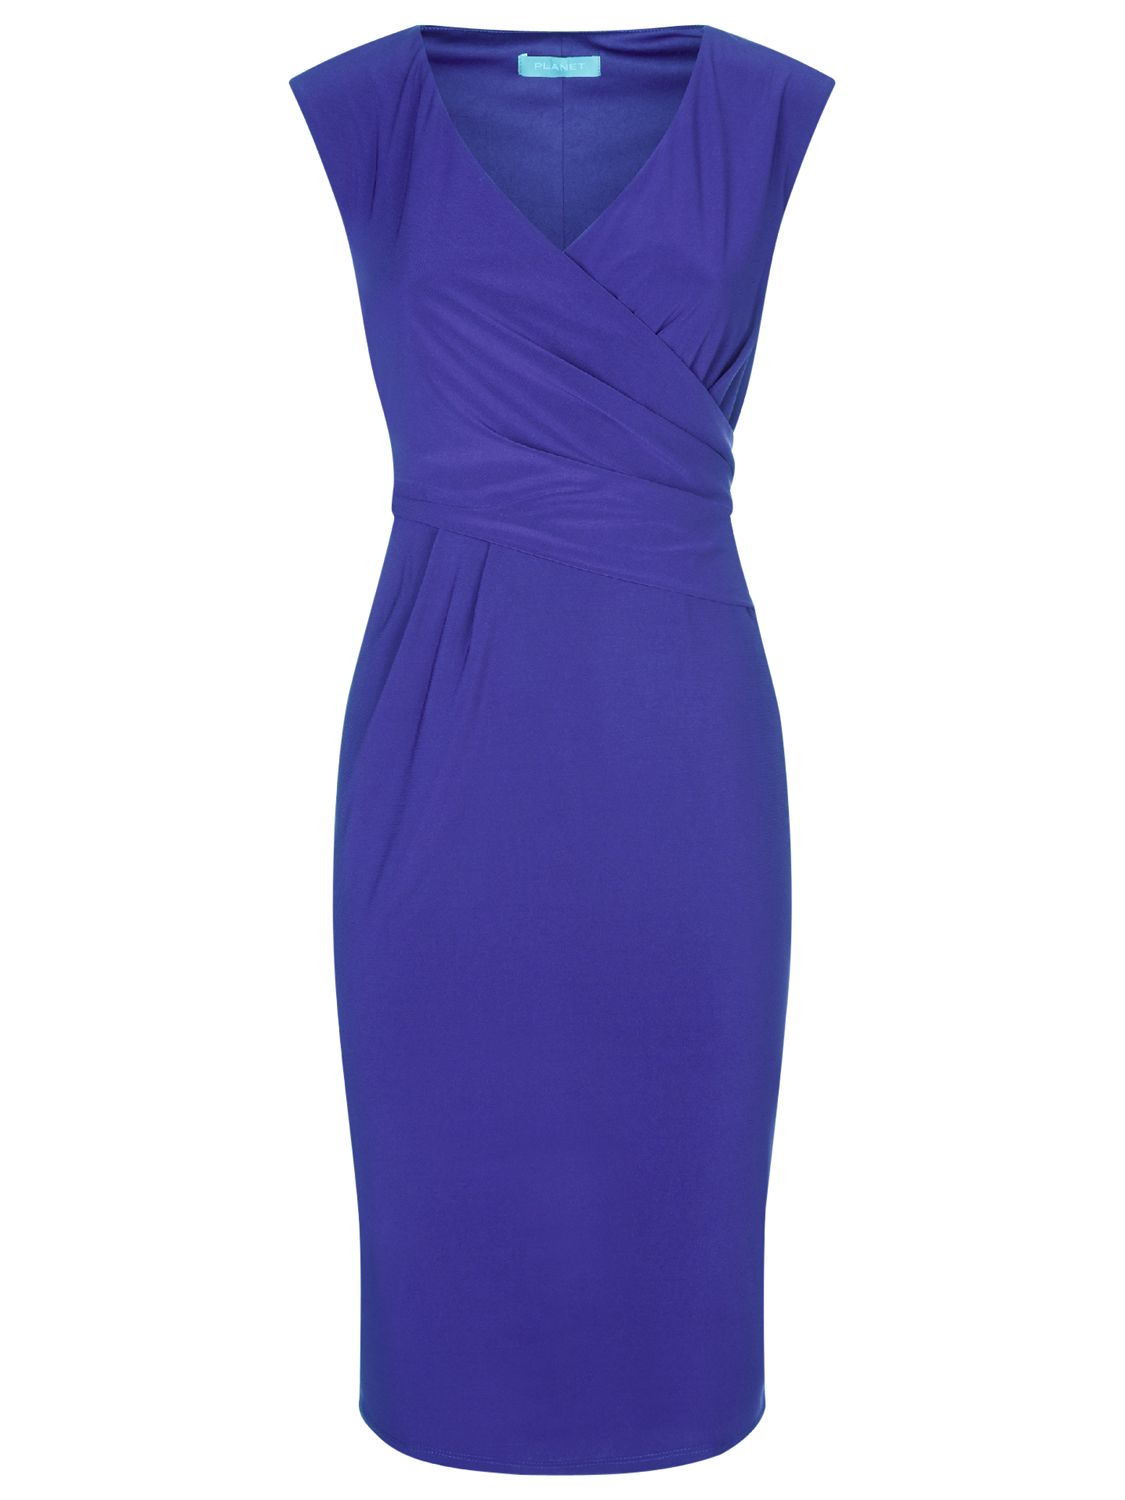 Planet Violet Dress, Mid Purple at John Lewis & Partners